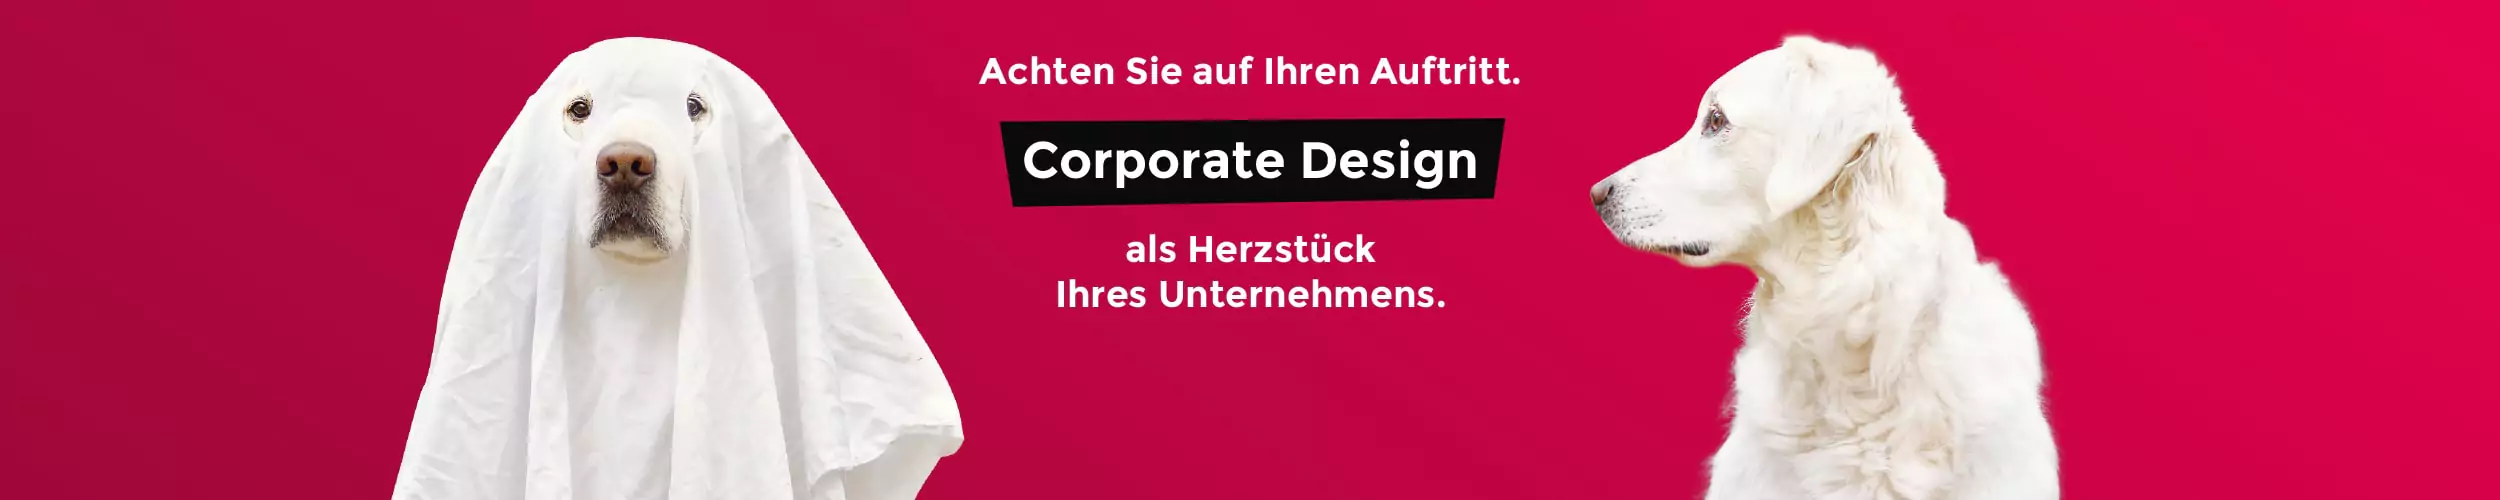 purpix - Corporate-Design